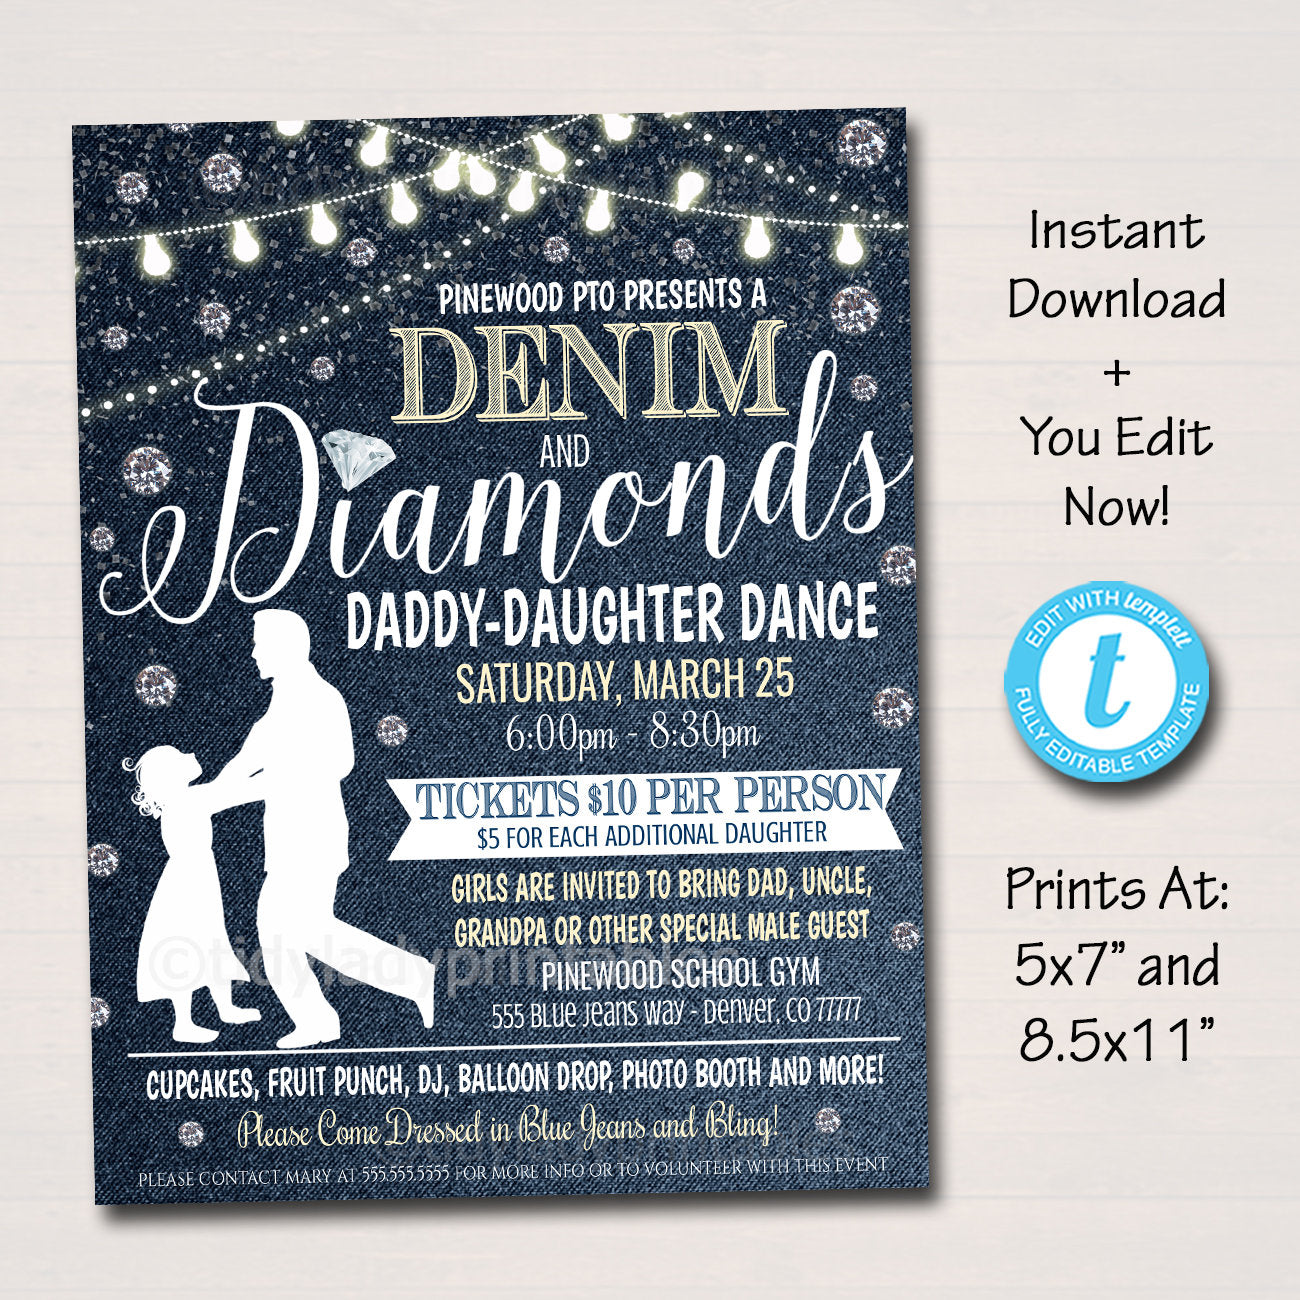 denim and diamonds theme party attire - Google Search  Denim and diamonds,  Diamond theme party, Diamond theme